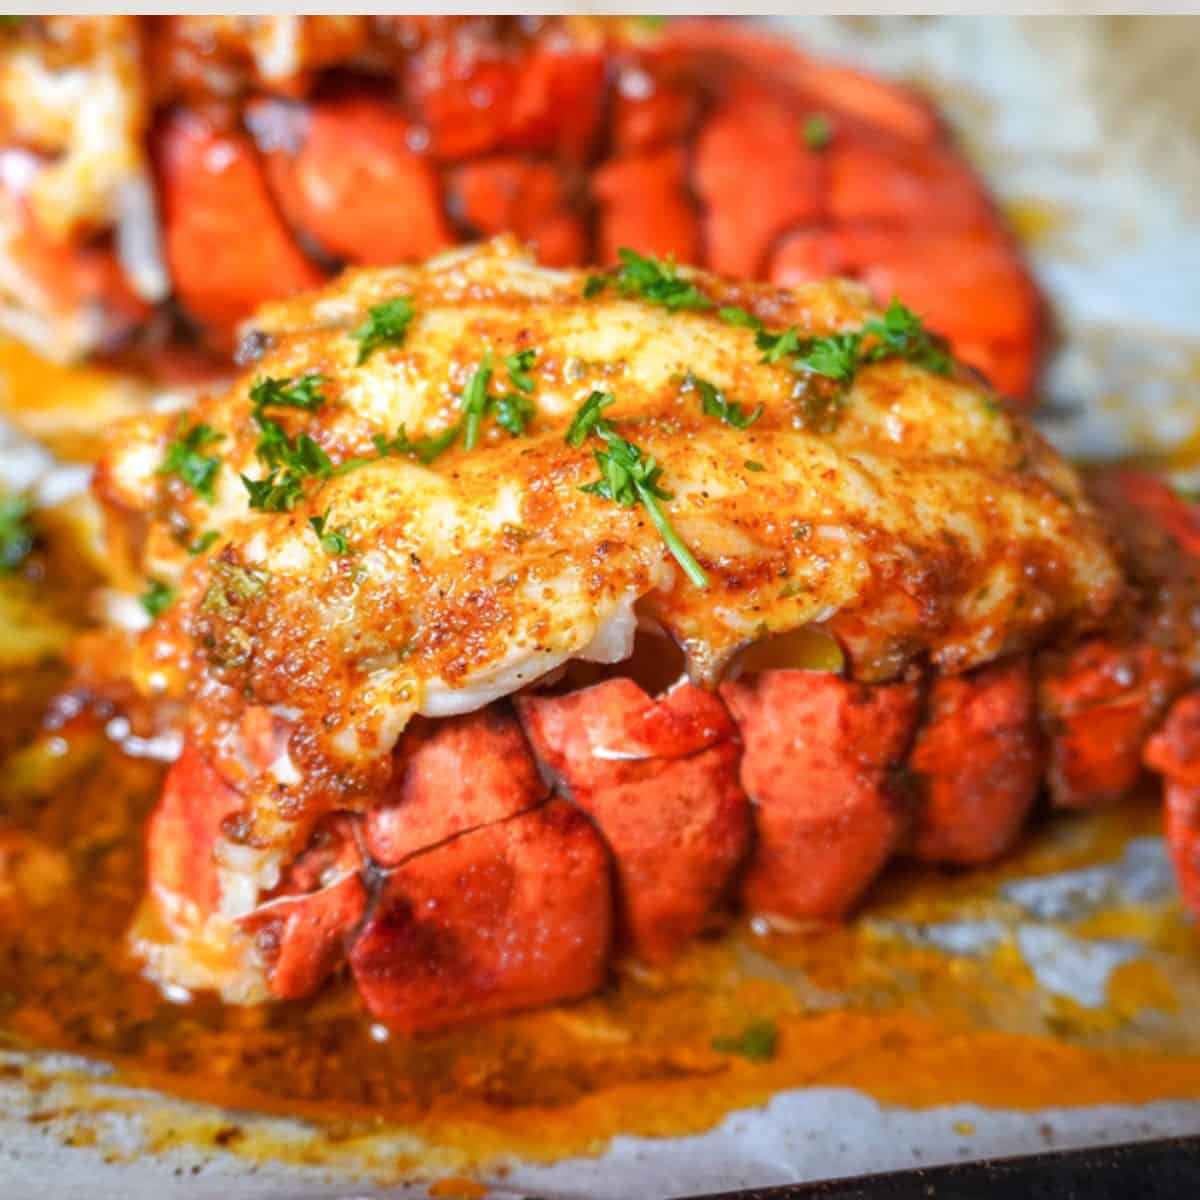 https://www.razzledazzlelife.com/wp-content/uploads/2023/03/razzle-dazzle-life-lobster-tail-recipe.jpg